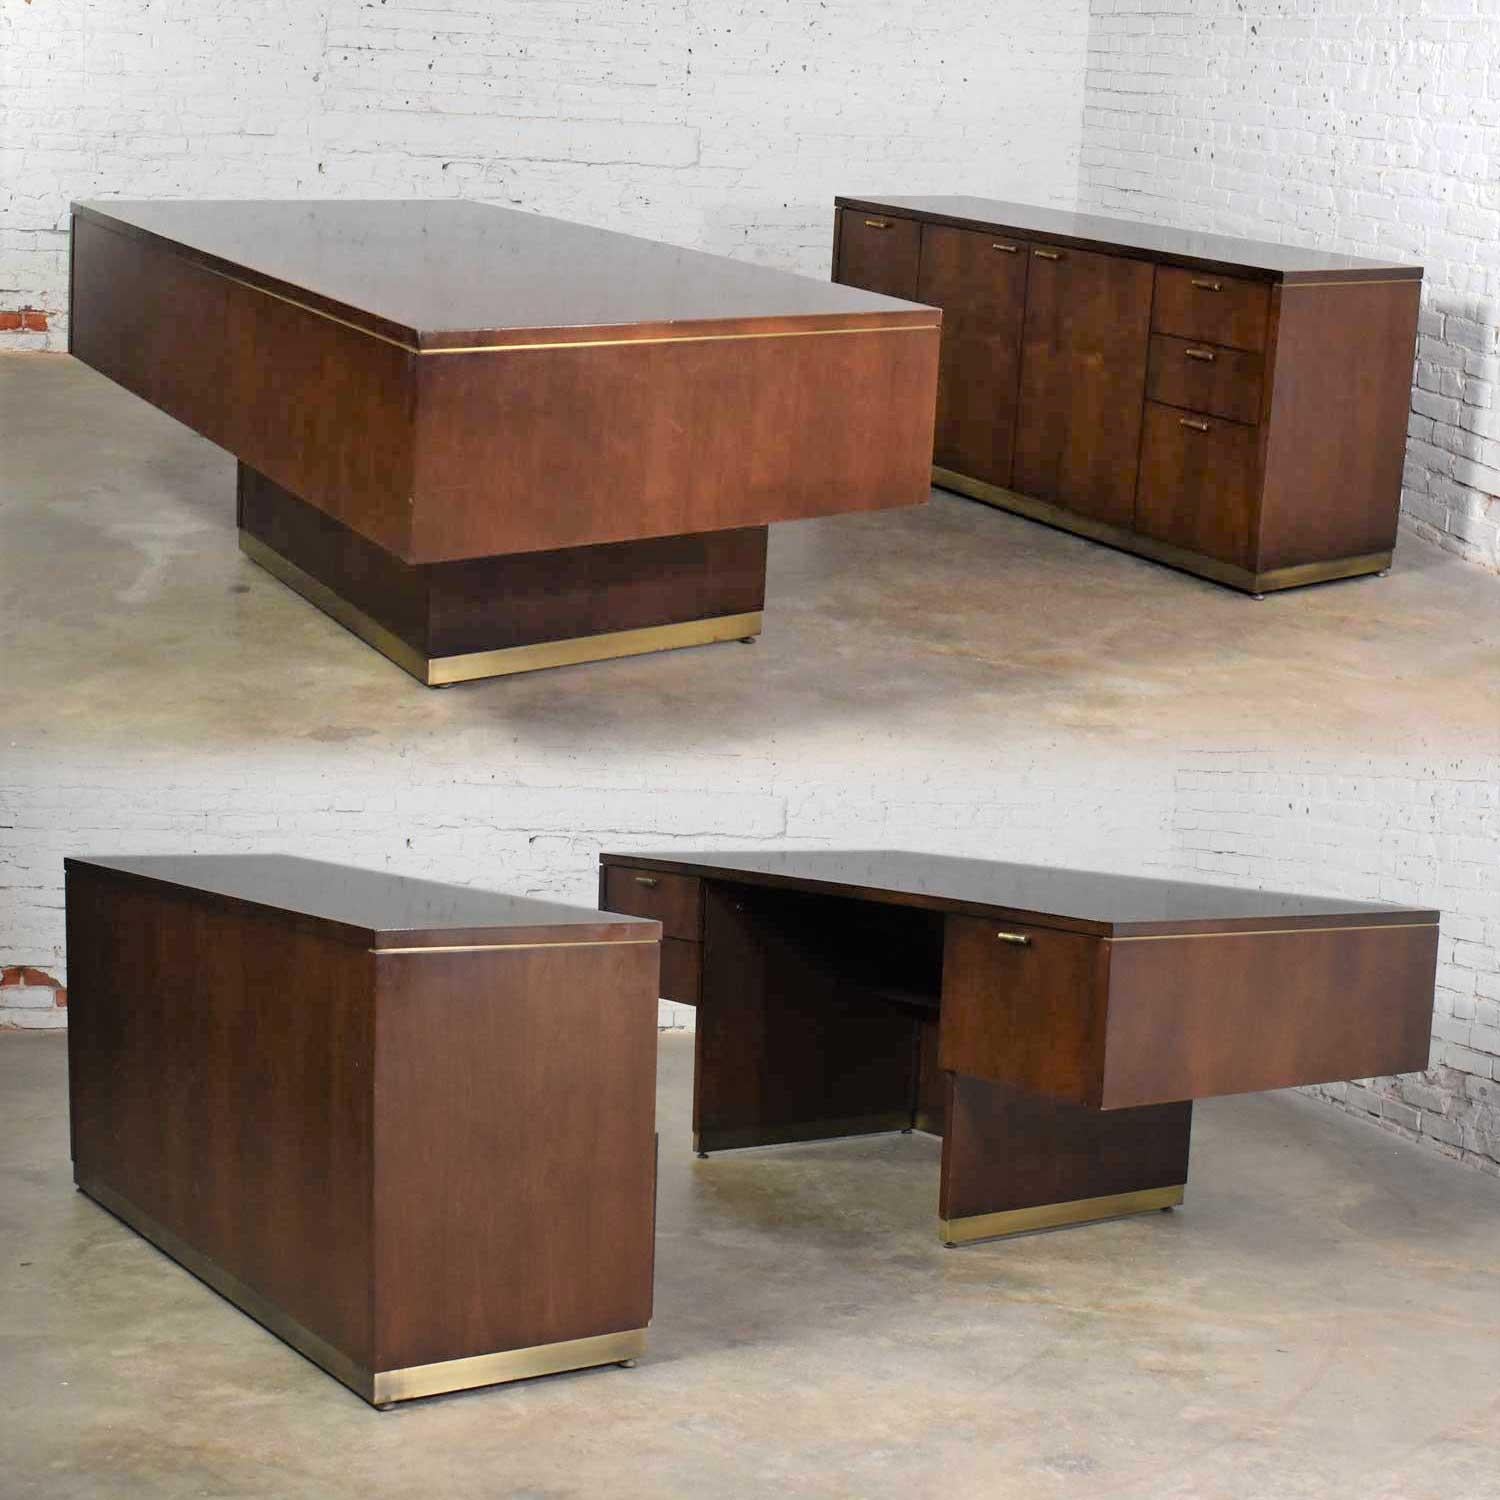 Brass Large Mid-Century Modern Cantilever Executive Desk & Credenza by Myrtle Desk Co.